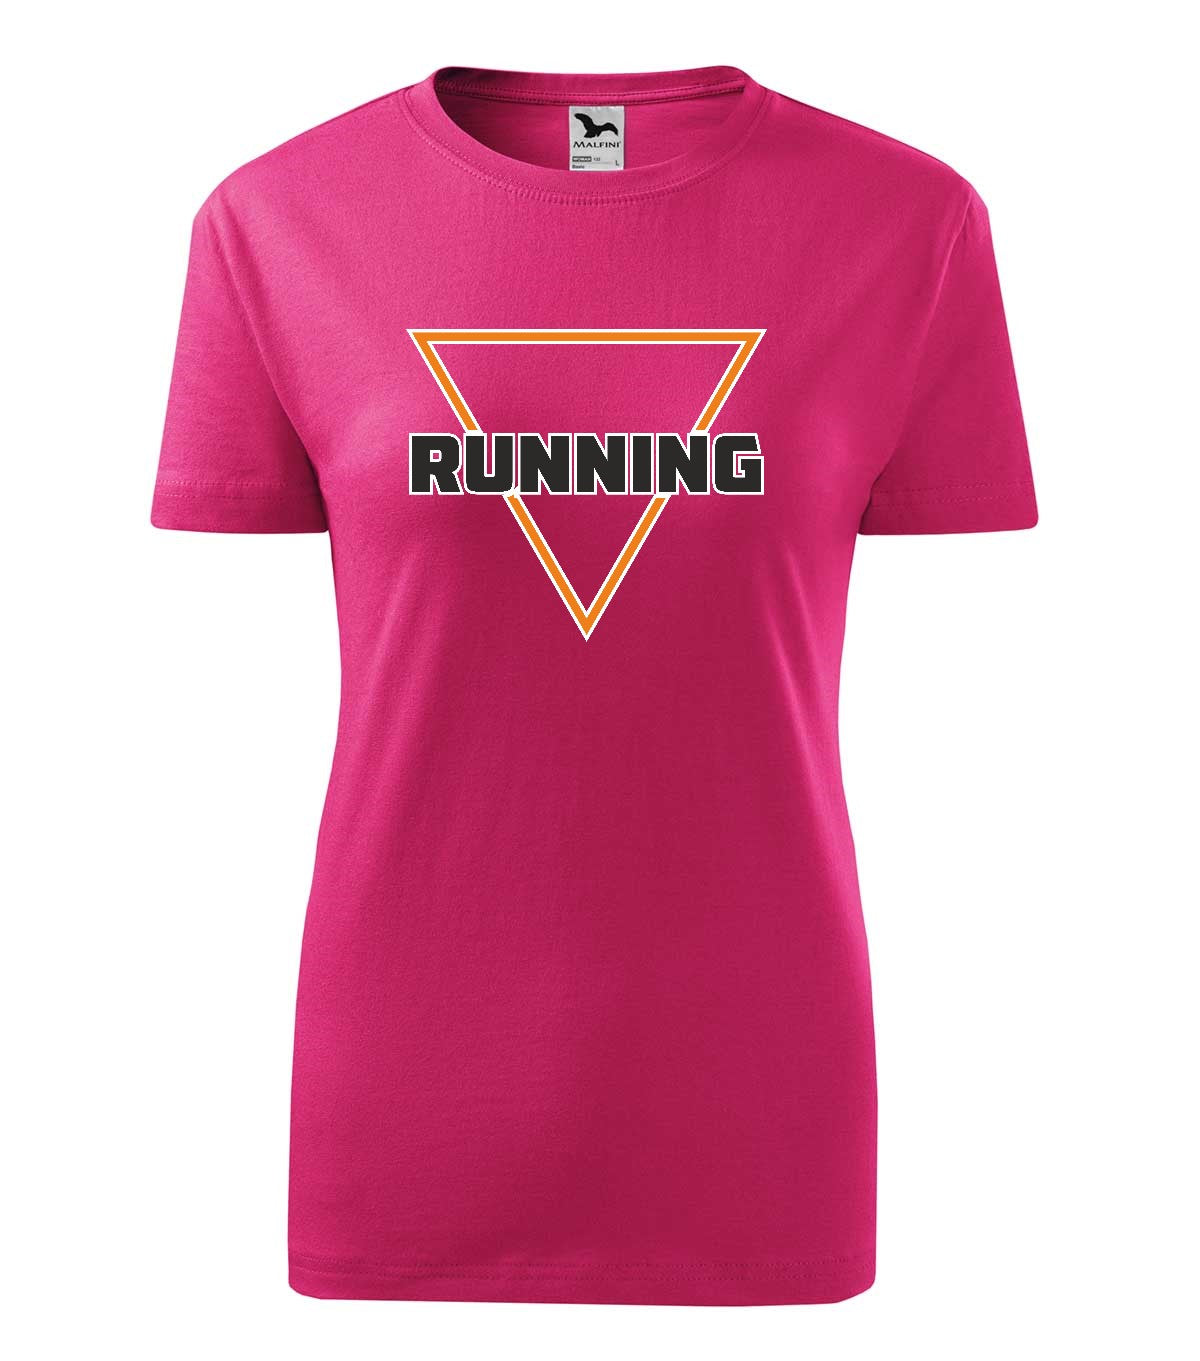 Running női technikai póló